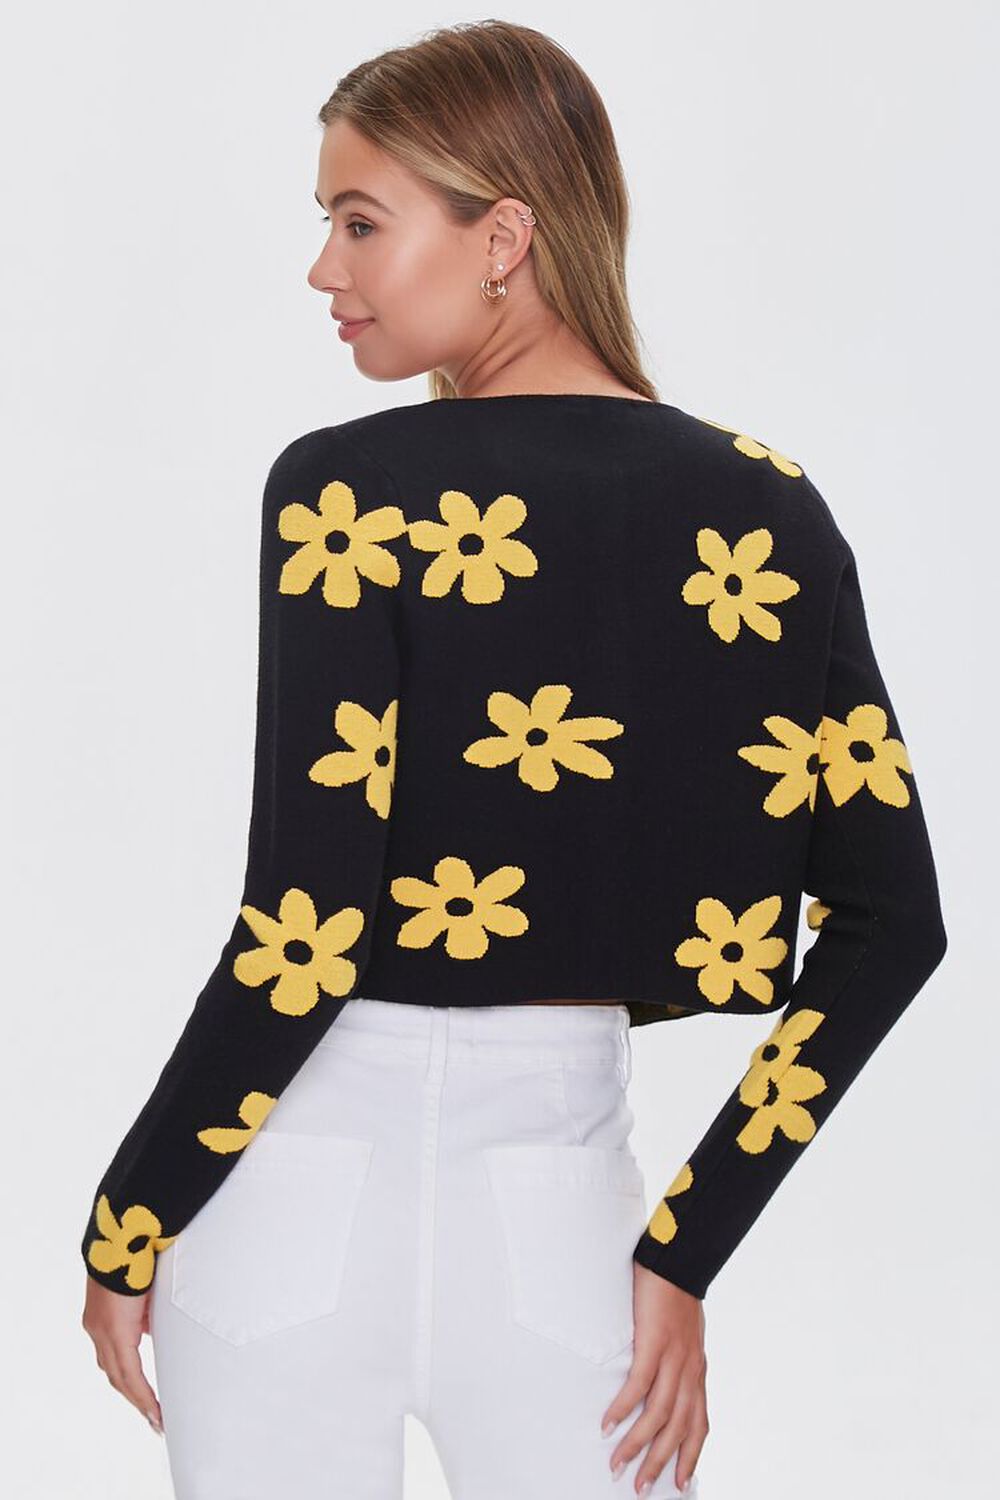 BLACK/YELLOW Daisy Print Buttoned Cardigan Sweater, image 3